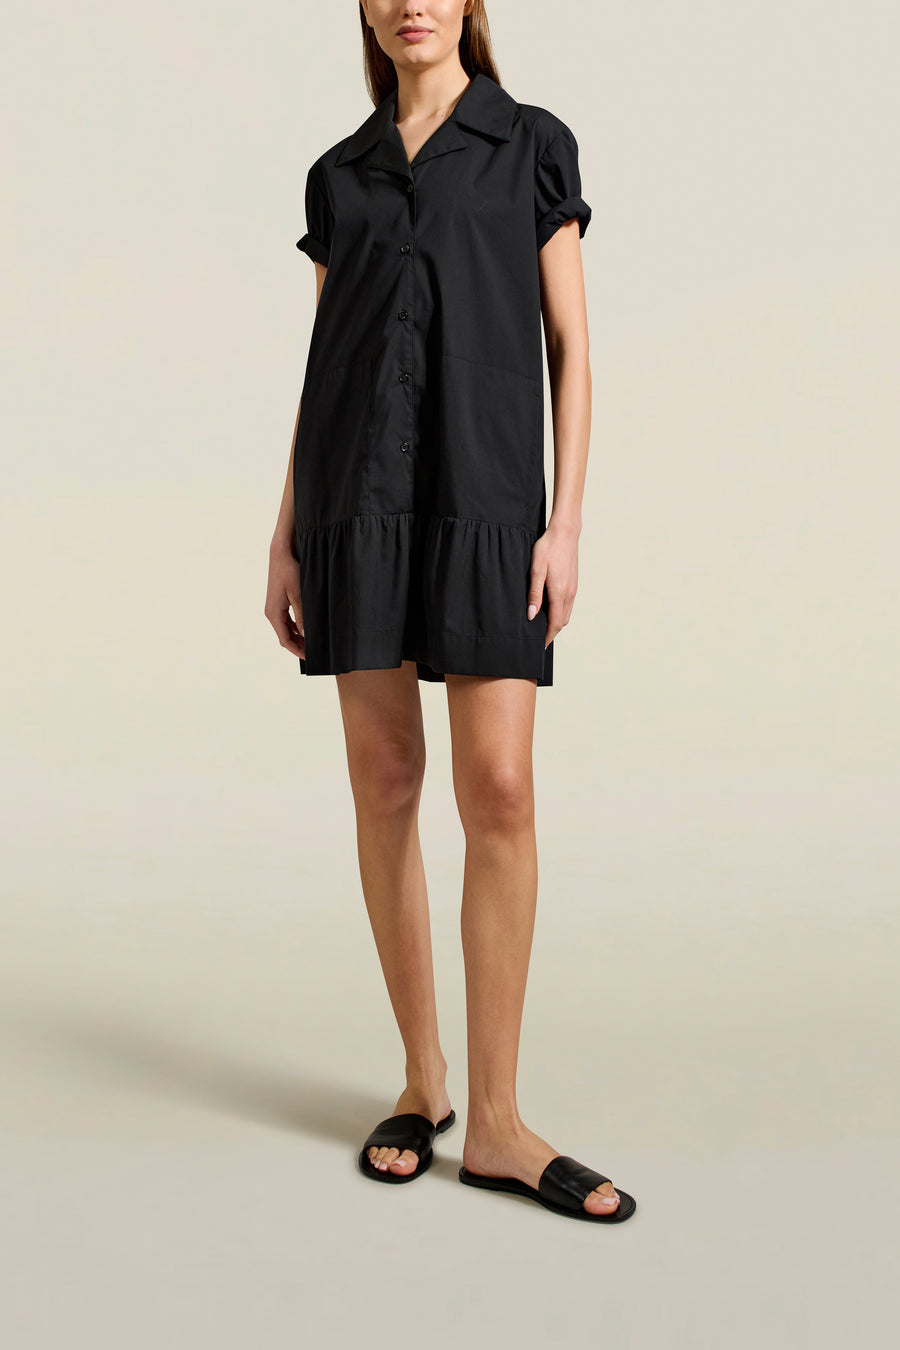 Mari Mini Dress in Black Techy Cotton Nylon